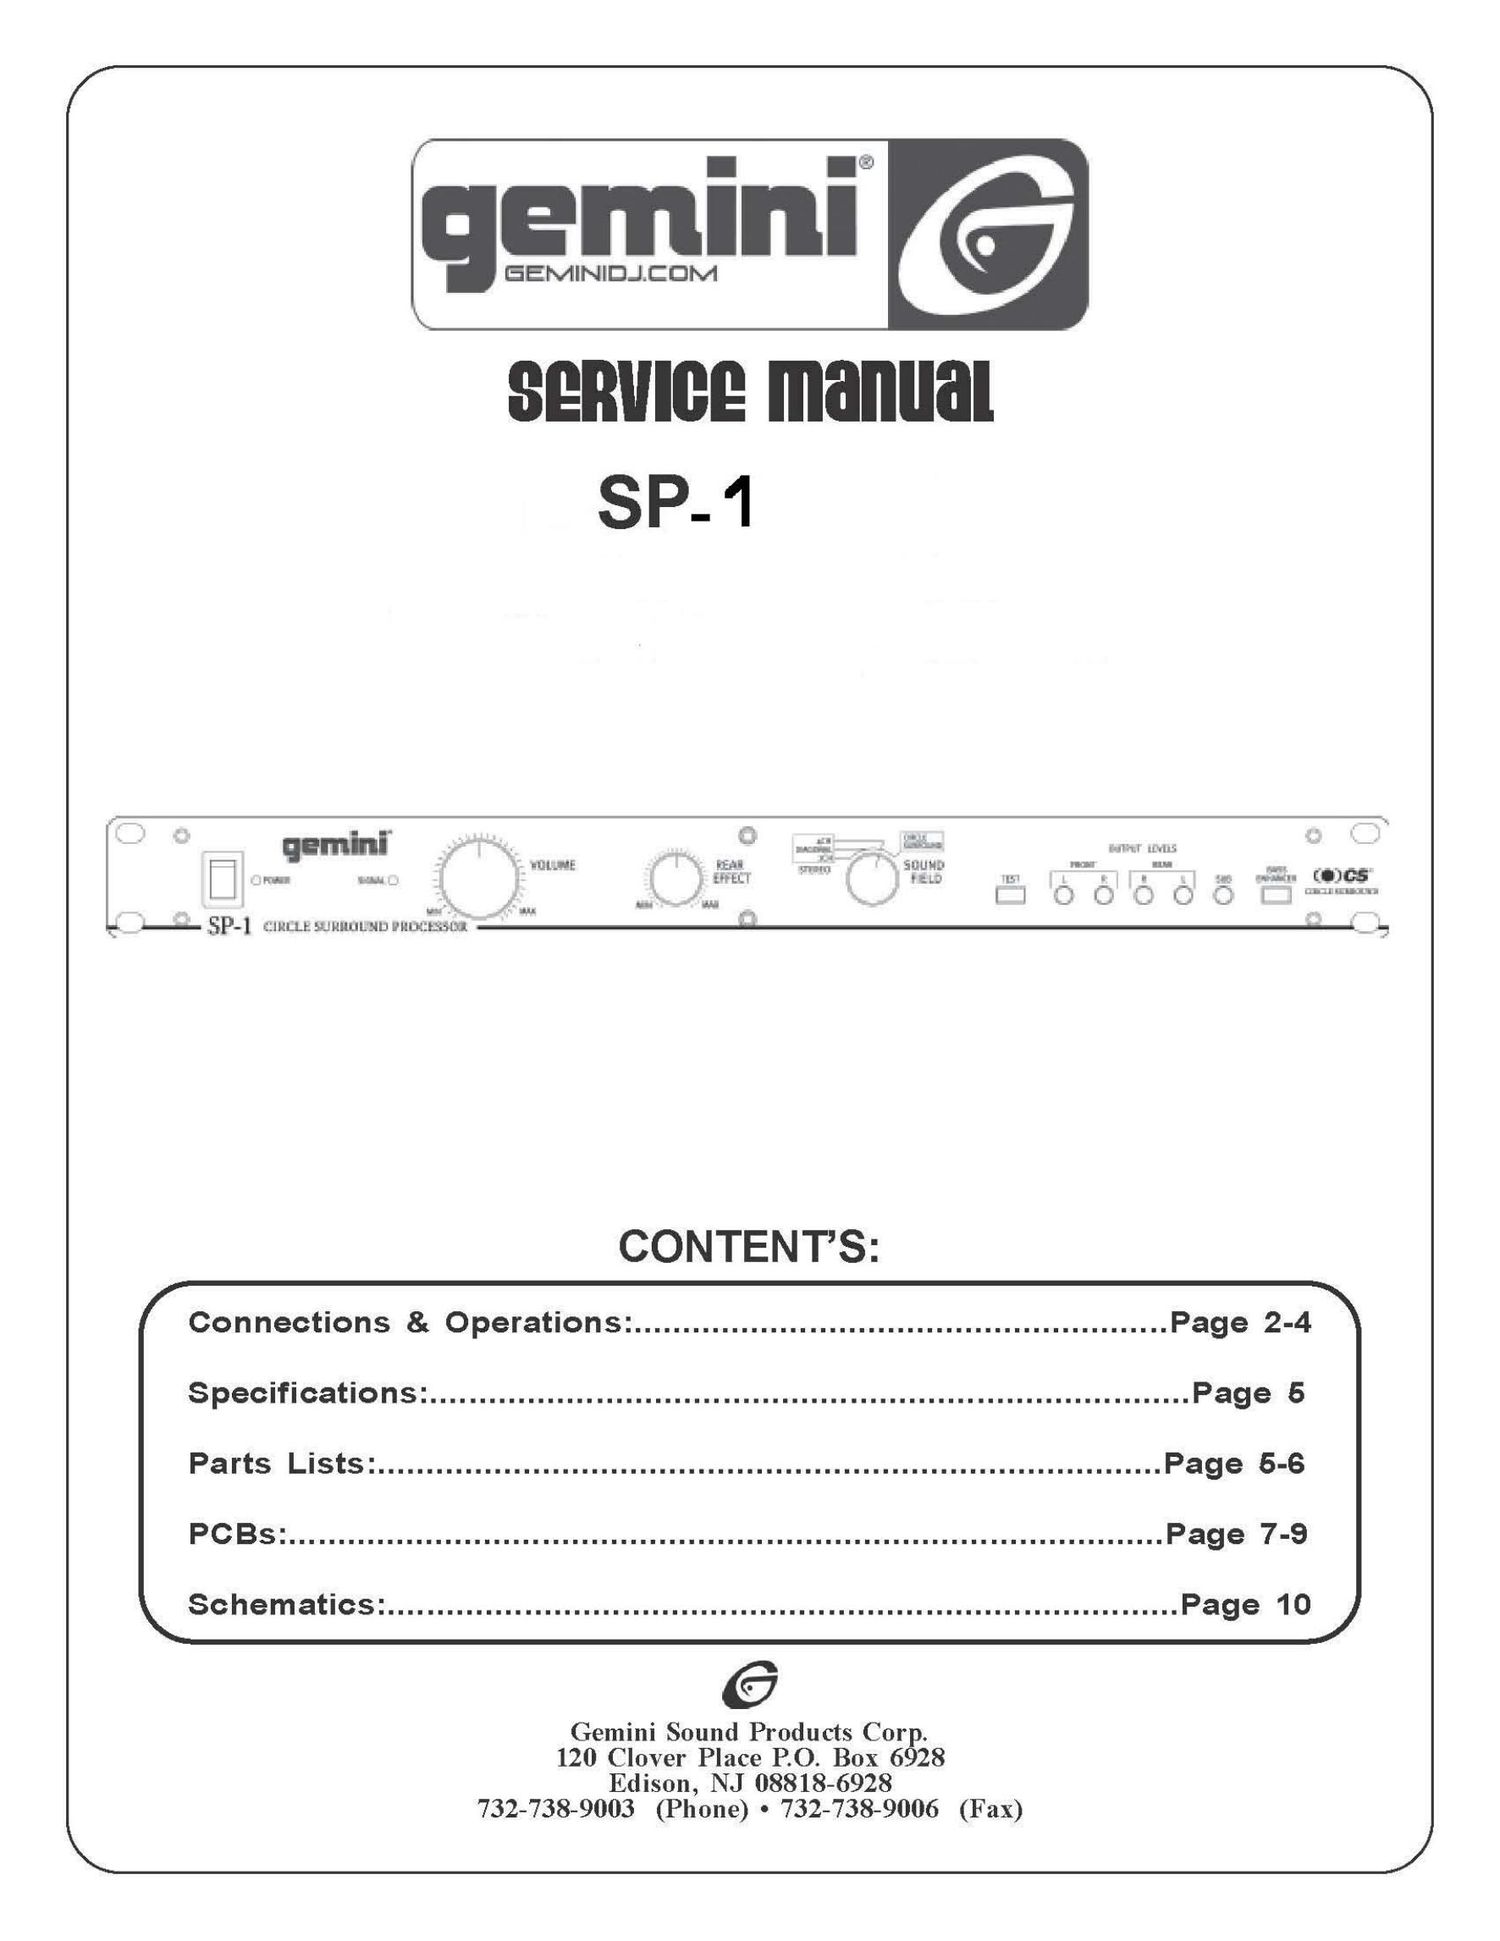 gemini sound sp 1 service manual